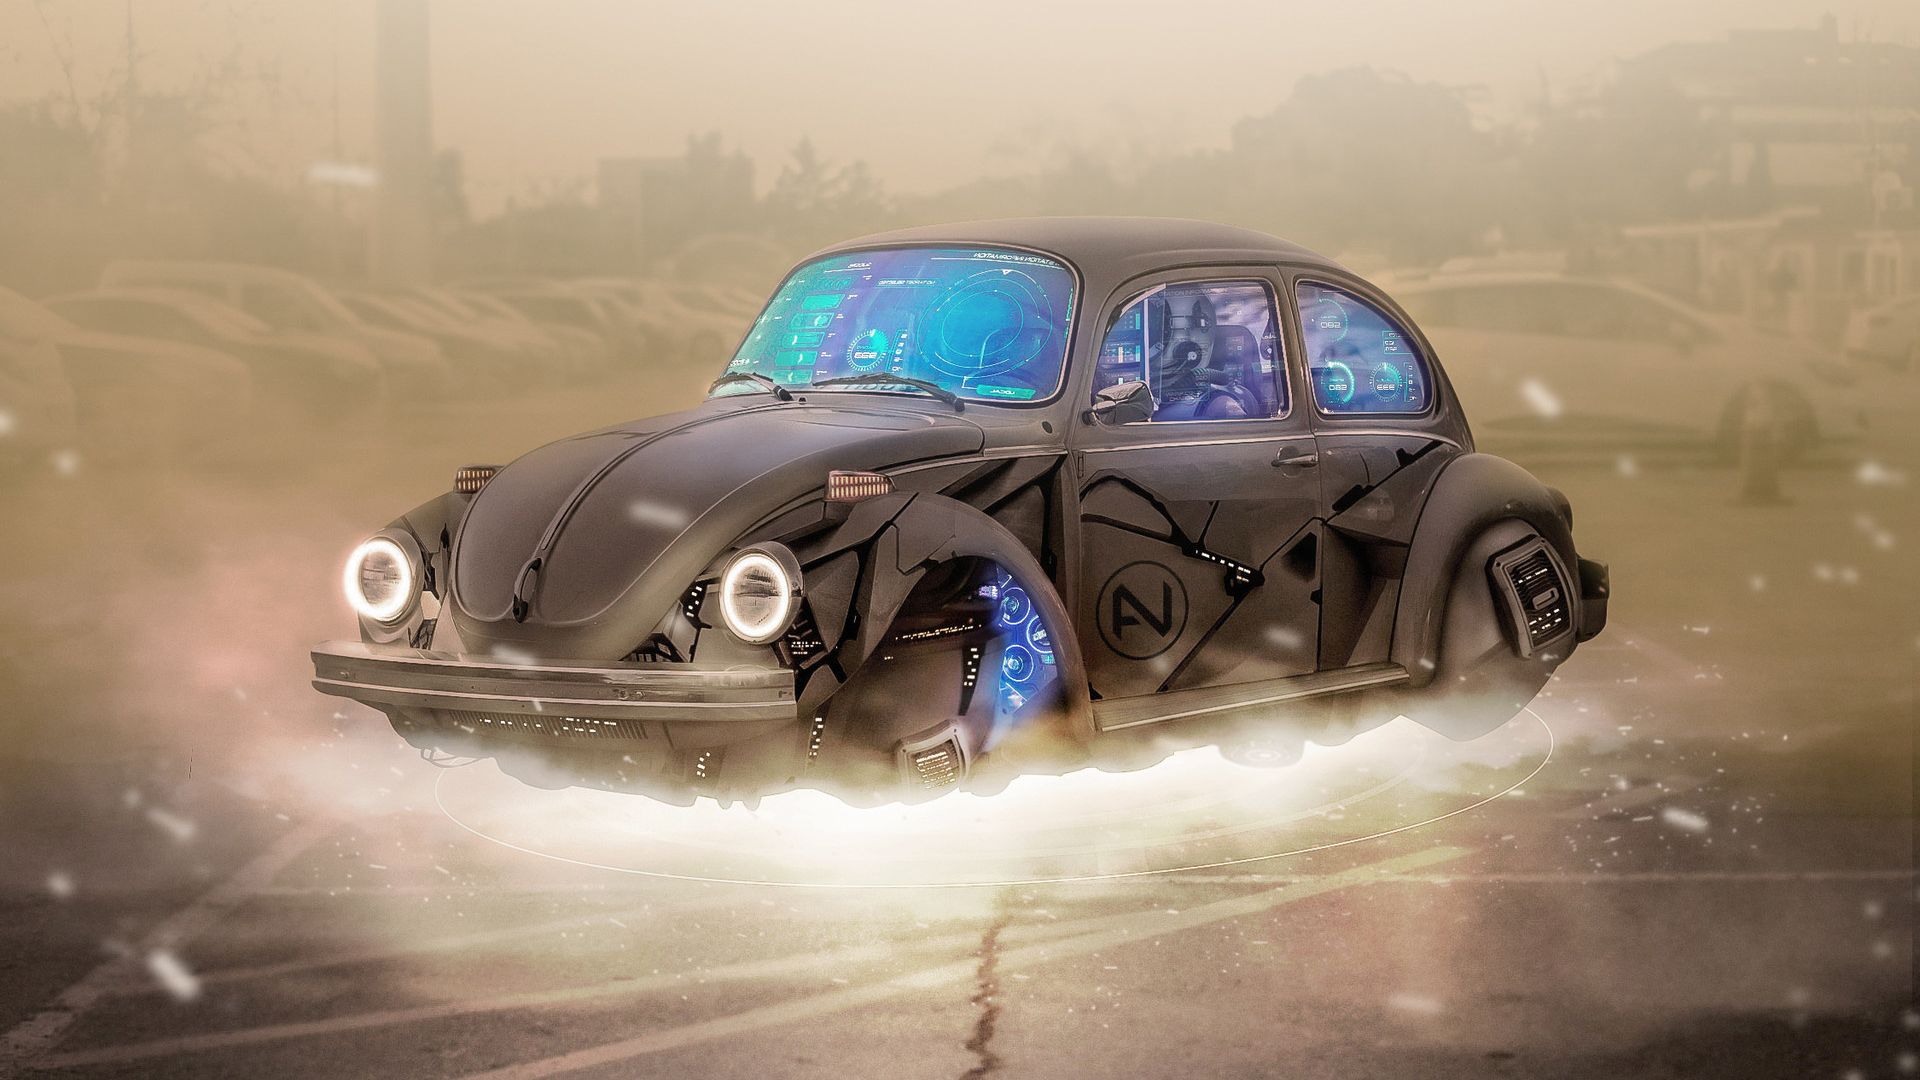 Desktop wallpaper tyre less, volkswagen beetle, futurist & modern car, HD image, picture, background, cee2cf